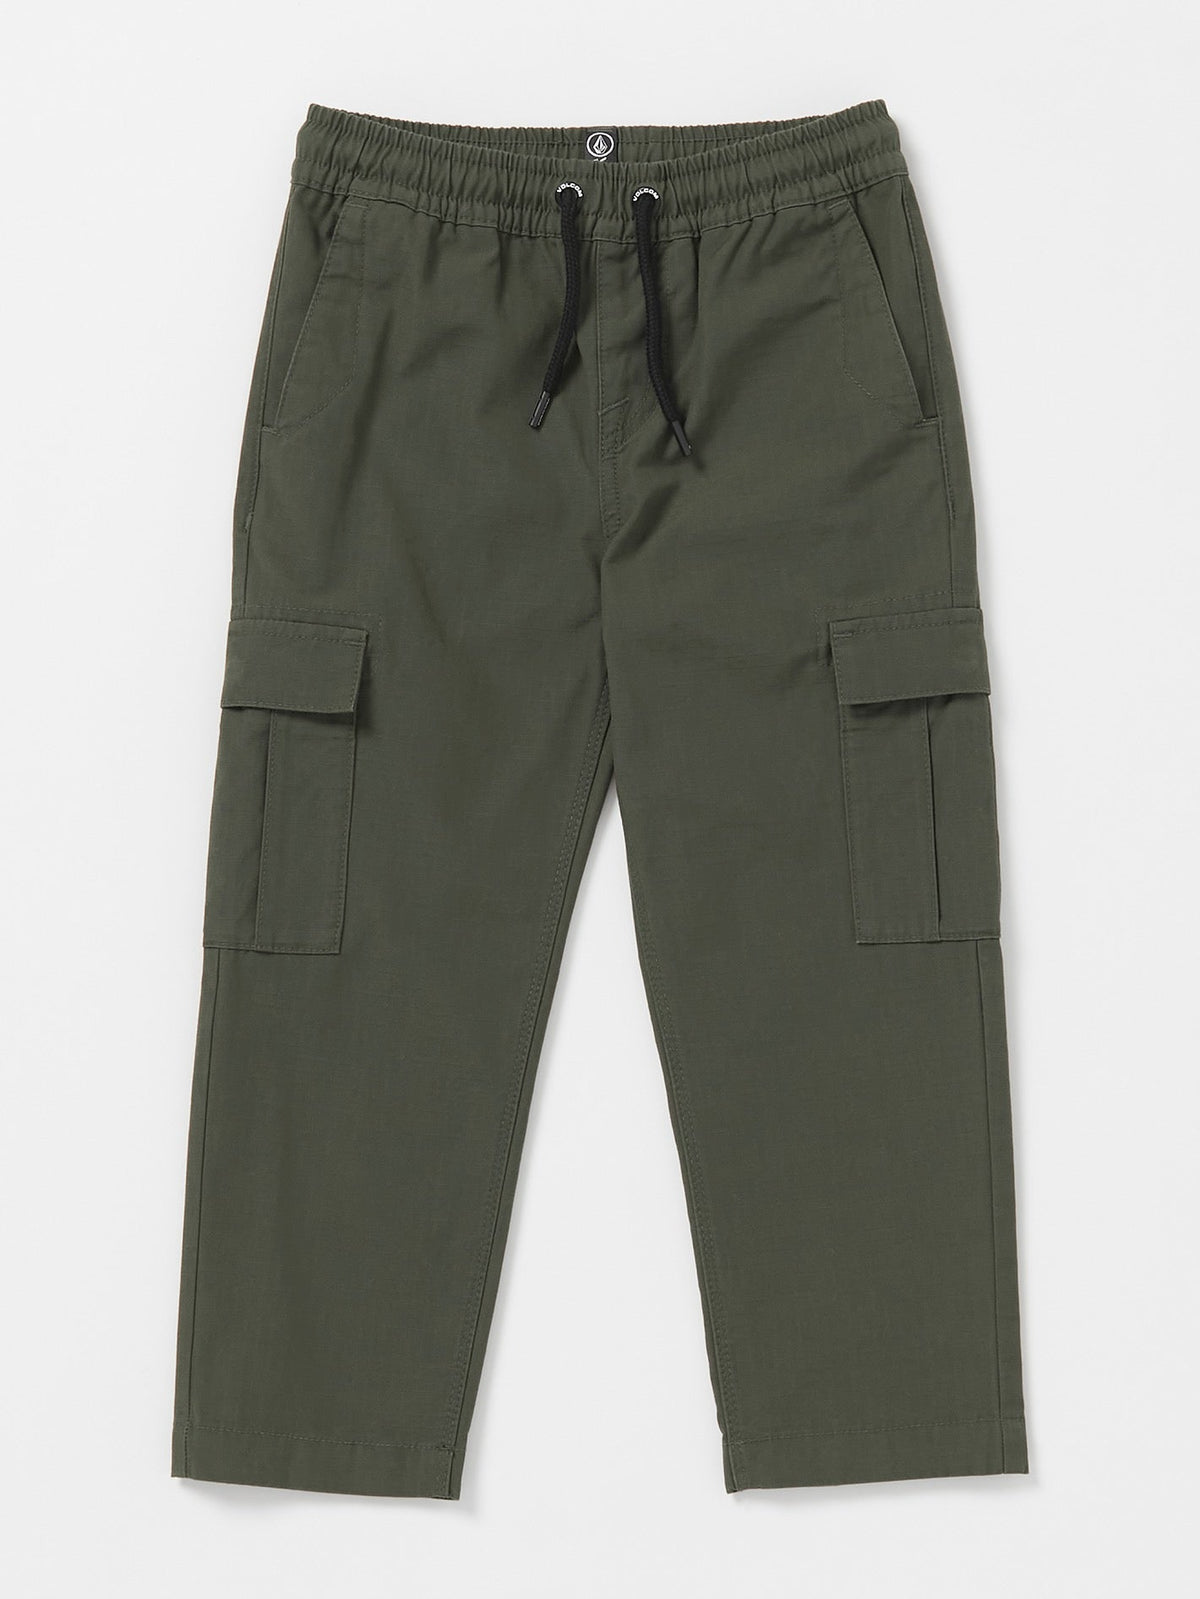 Volcom March Cargo Elastic Waist Boys Pants (Age 2-7) Squadron Green